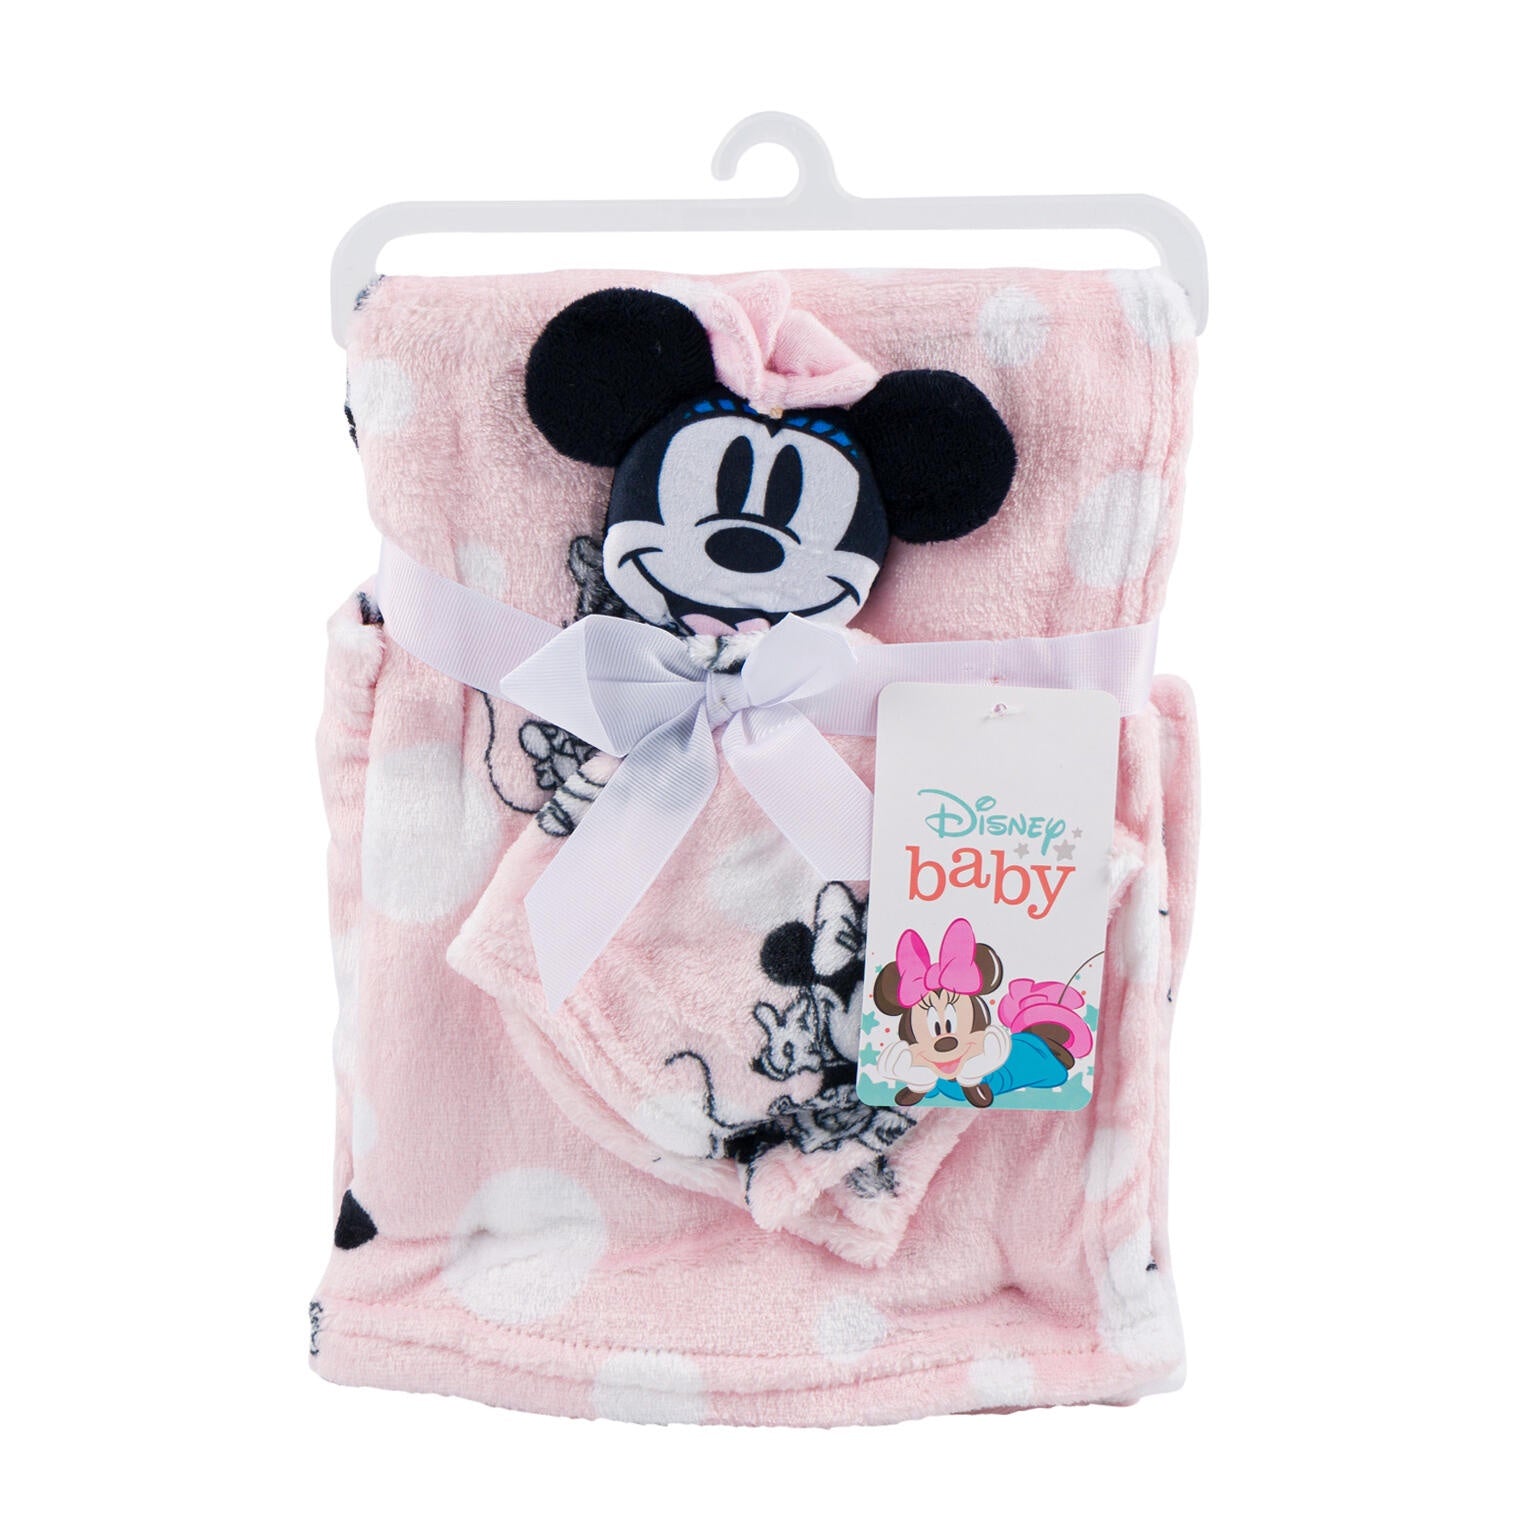 Minnie Mouse Polka Dot Blanket- 30x36